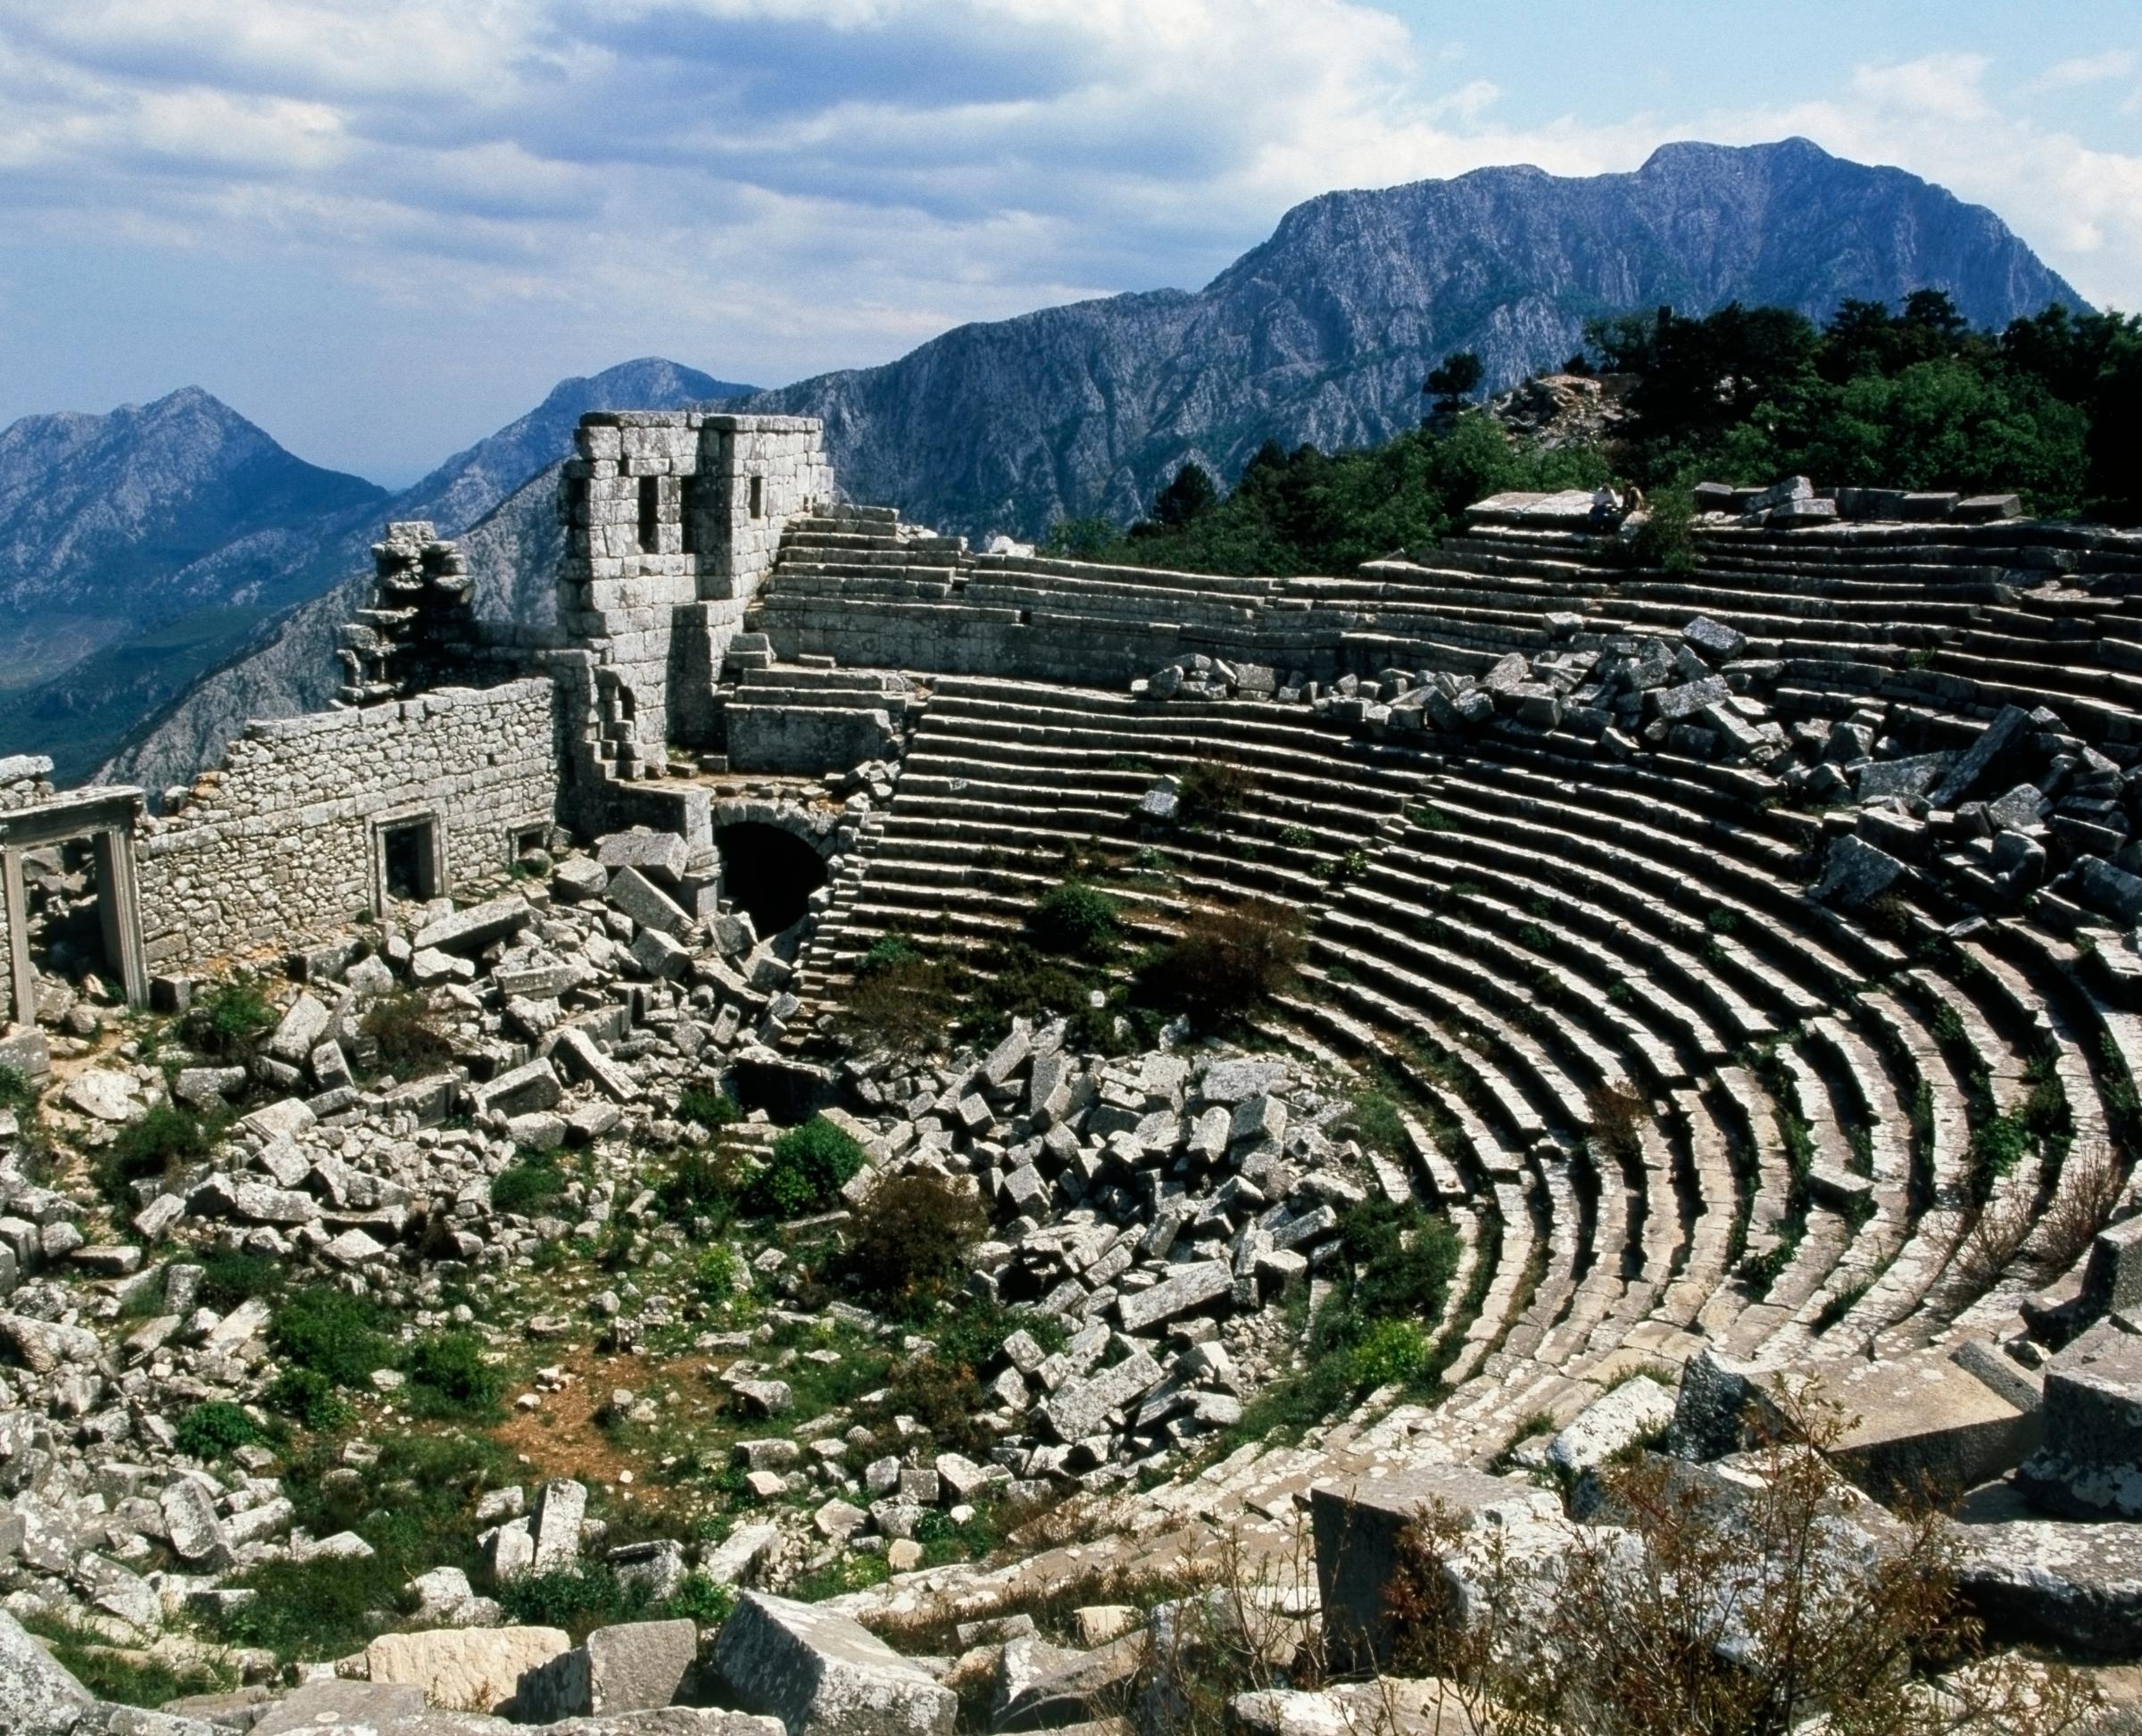 View of the Greek theatre of Termessos in Gullukdagi National Park, Turkey on Jan. 1, 2003.